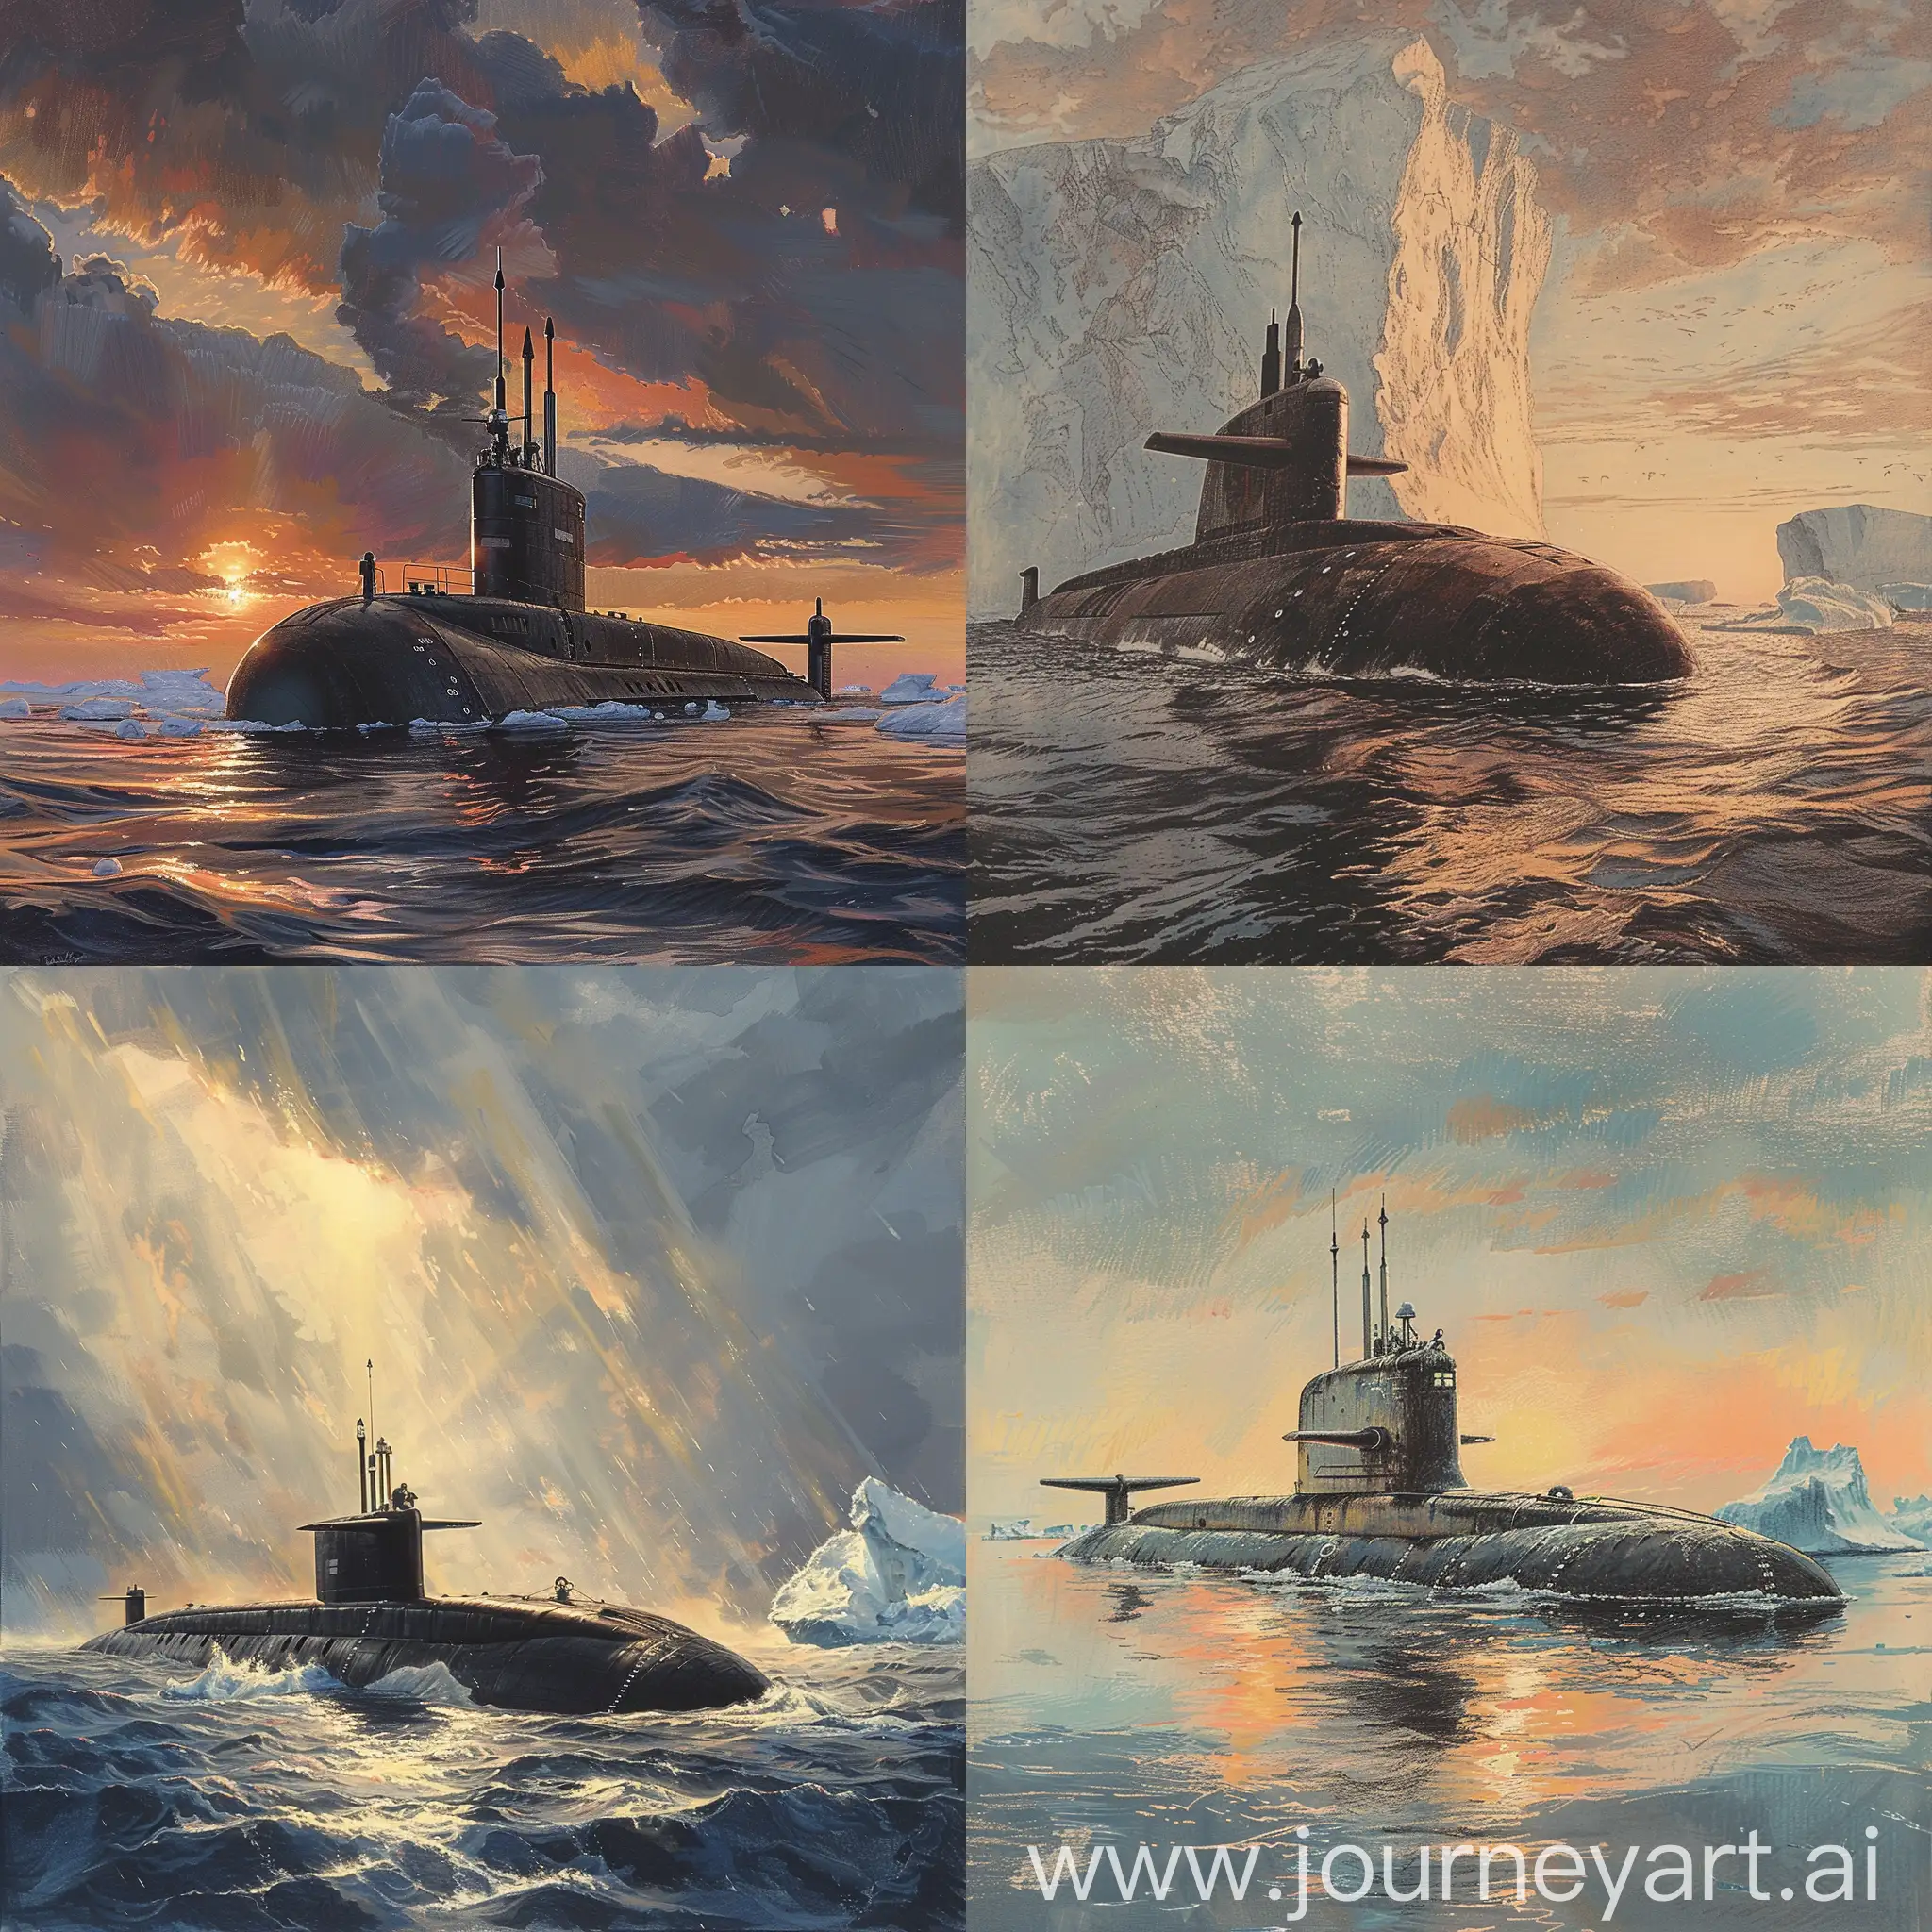 Submarine-Emerges-from-Arctic-Iceberg-in-Dramatic-Morning-Light